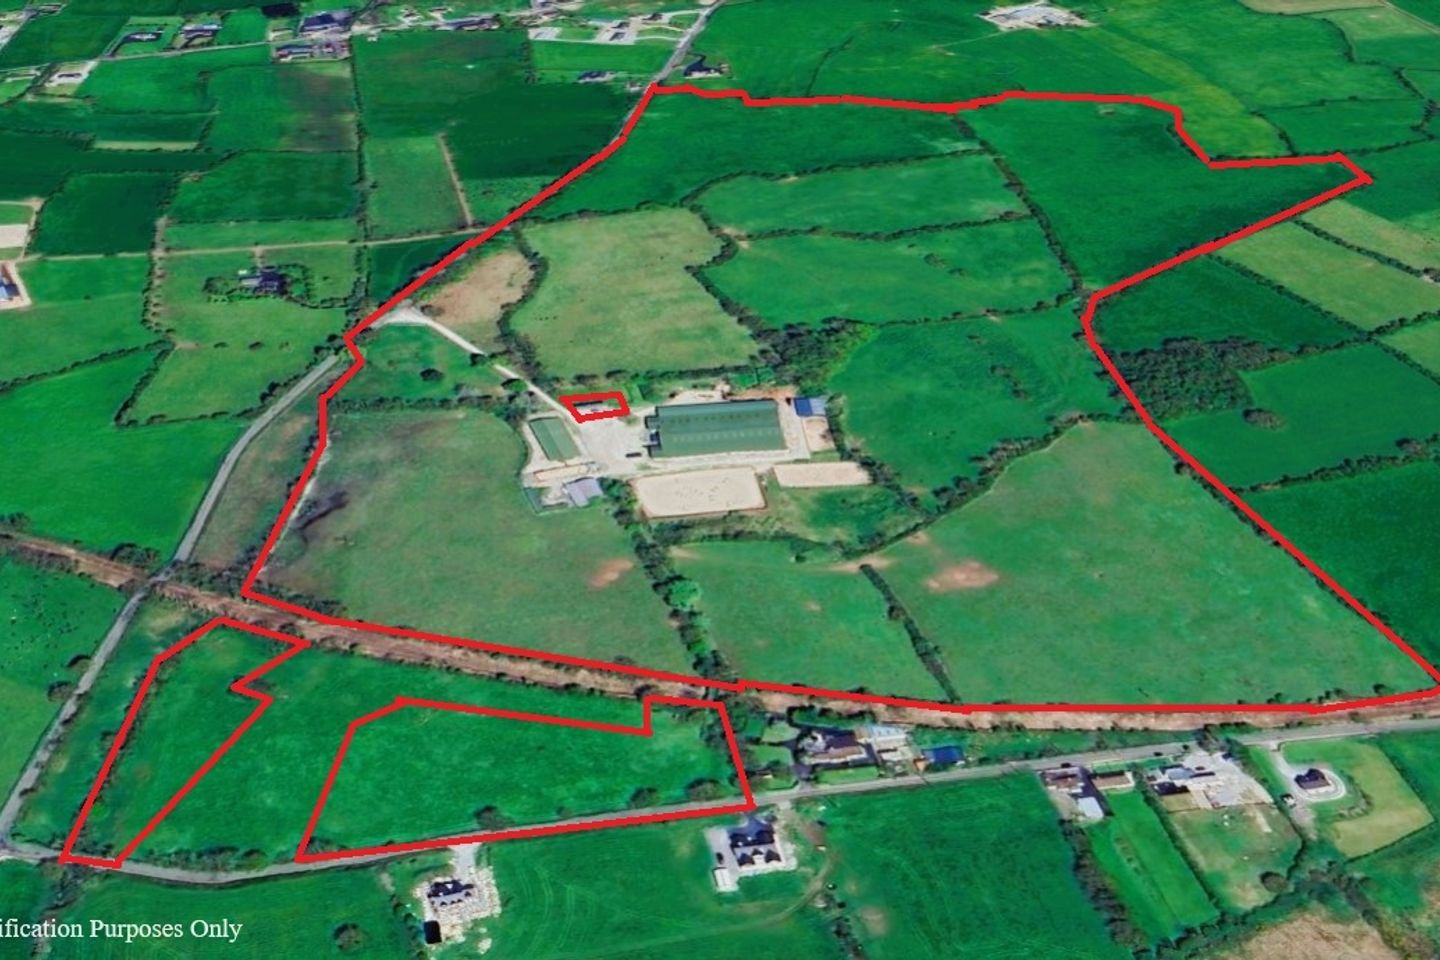 Lands at Doohyle Beg, Askeaton, Co. Limerick